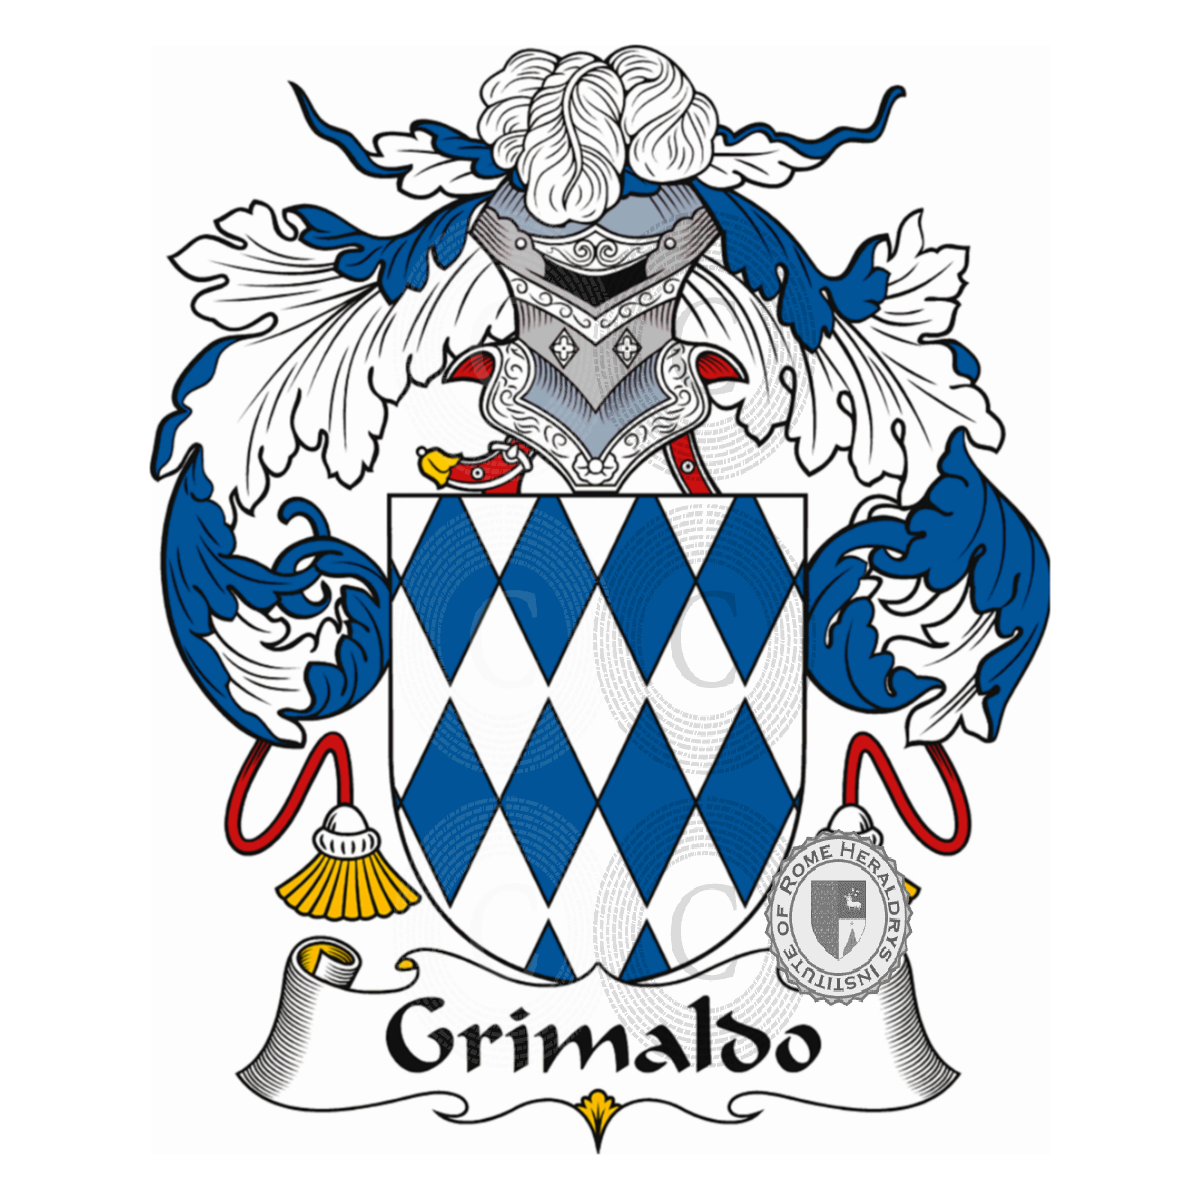 Brasão da famíliaGrimaldo, Grimaldi